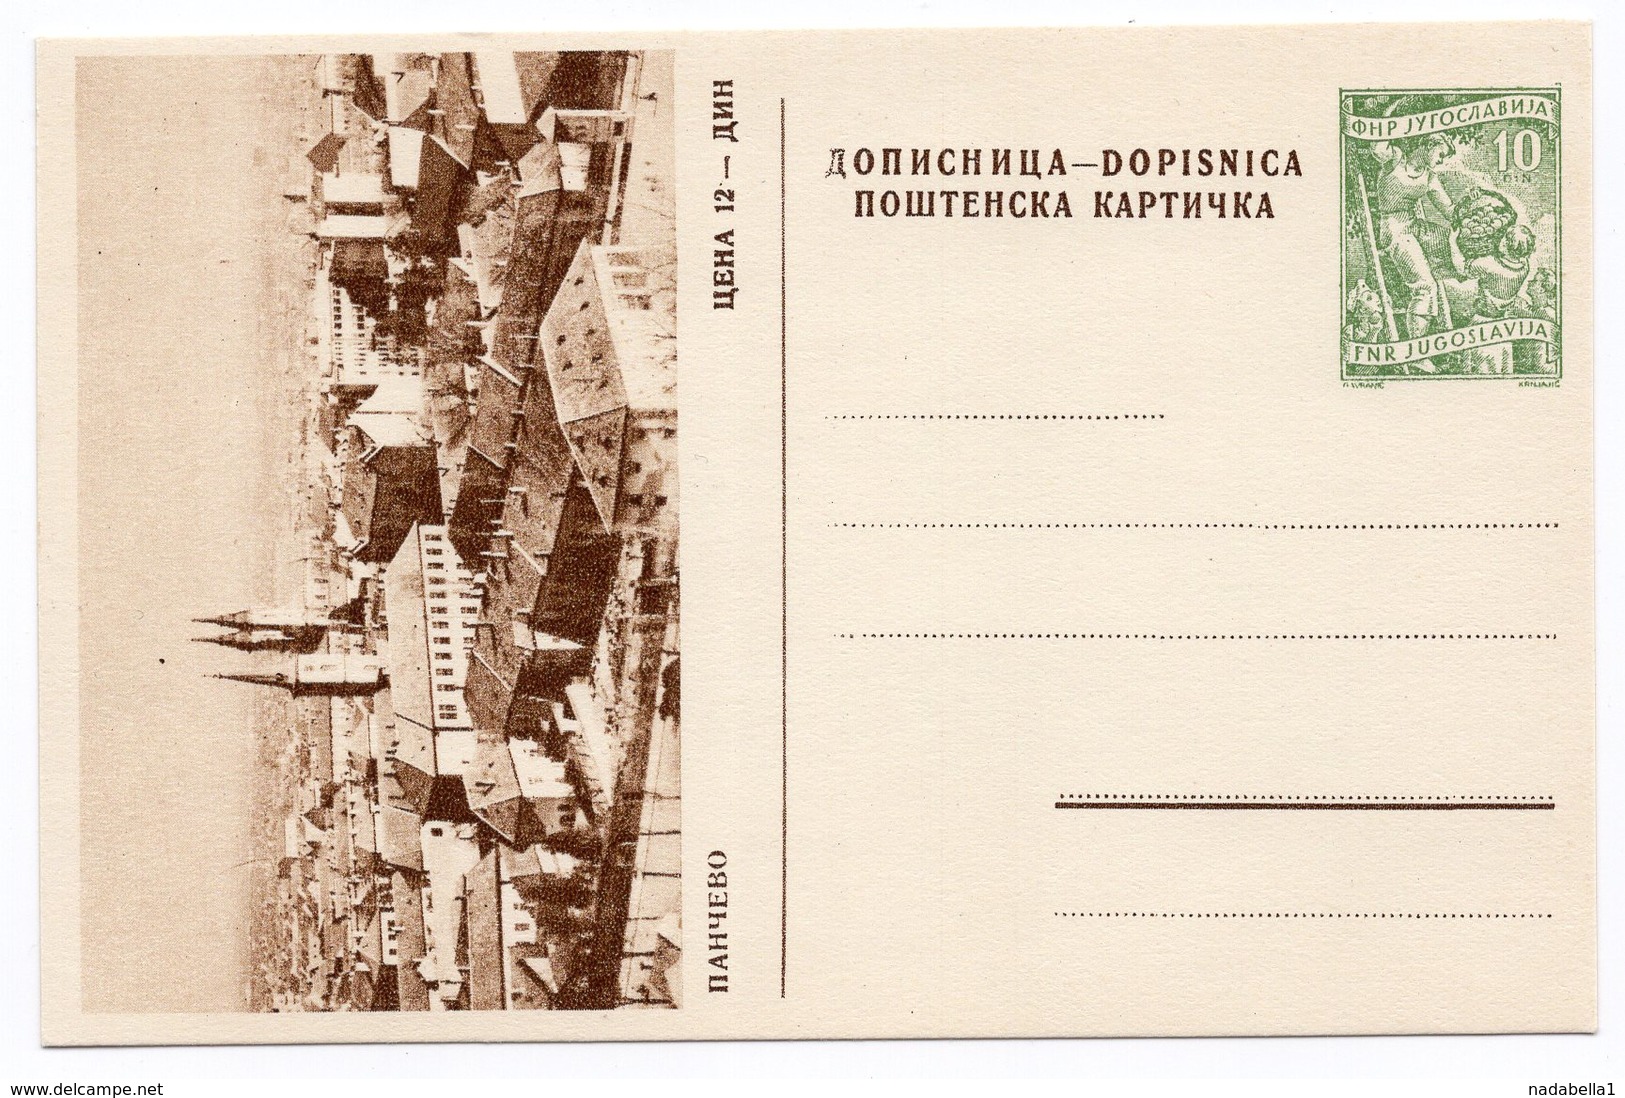 1956, YUGOSLAVIA, PANCEVO, SERBIA, 10 DINARA GREEN, ILLUSTRATED STATIONERY CARD, MINT - Postal Stationery